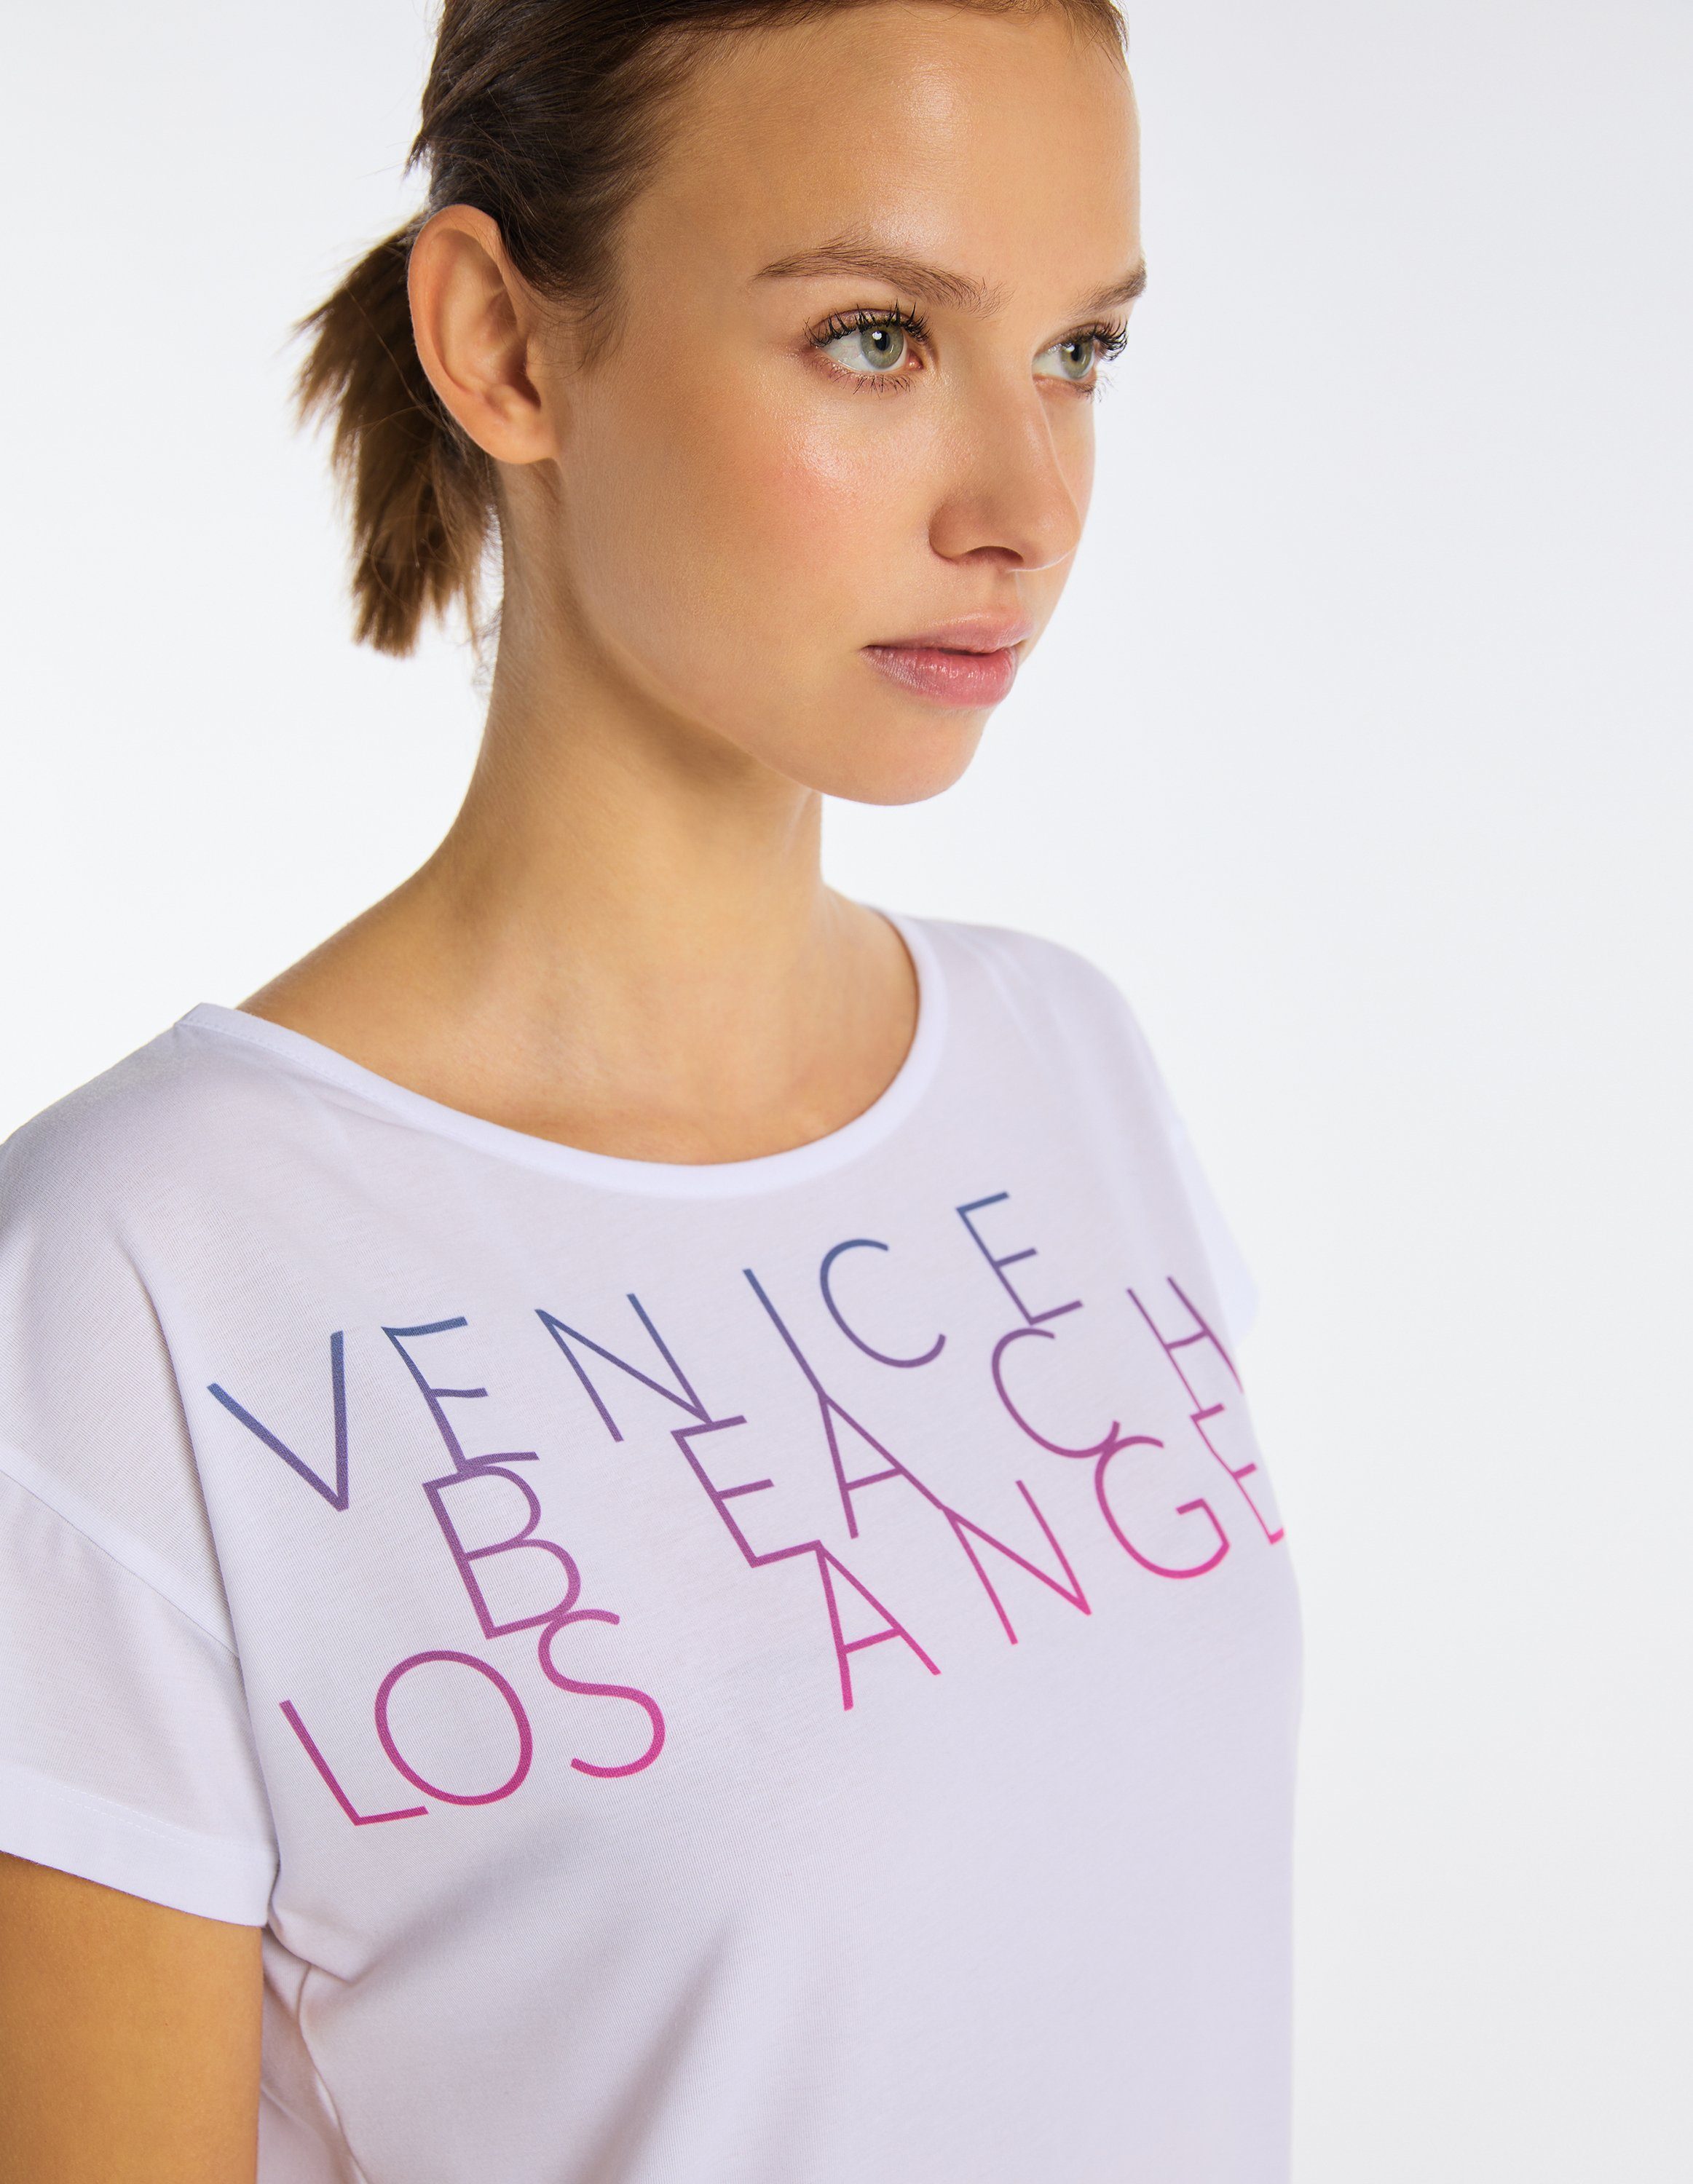 TIANA Venice Beach VB T-Shirt T-Shirt